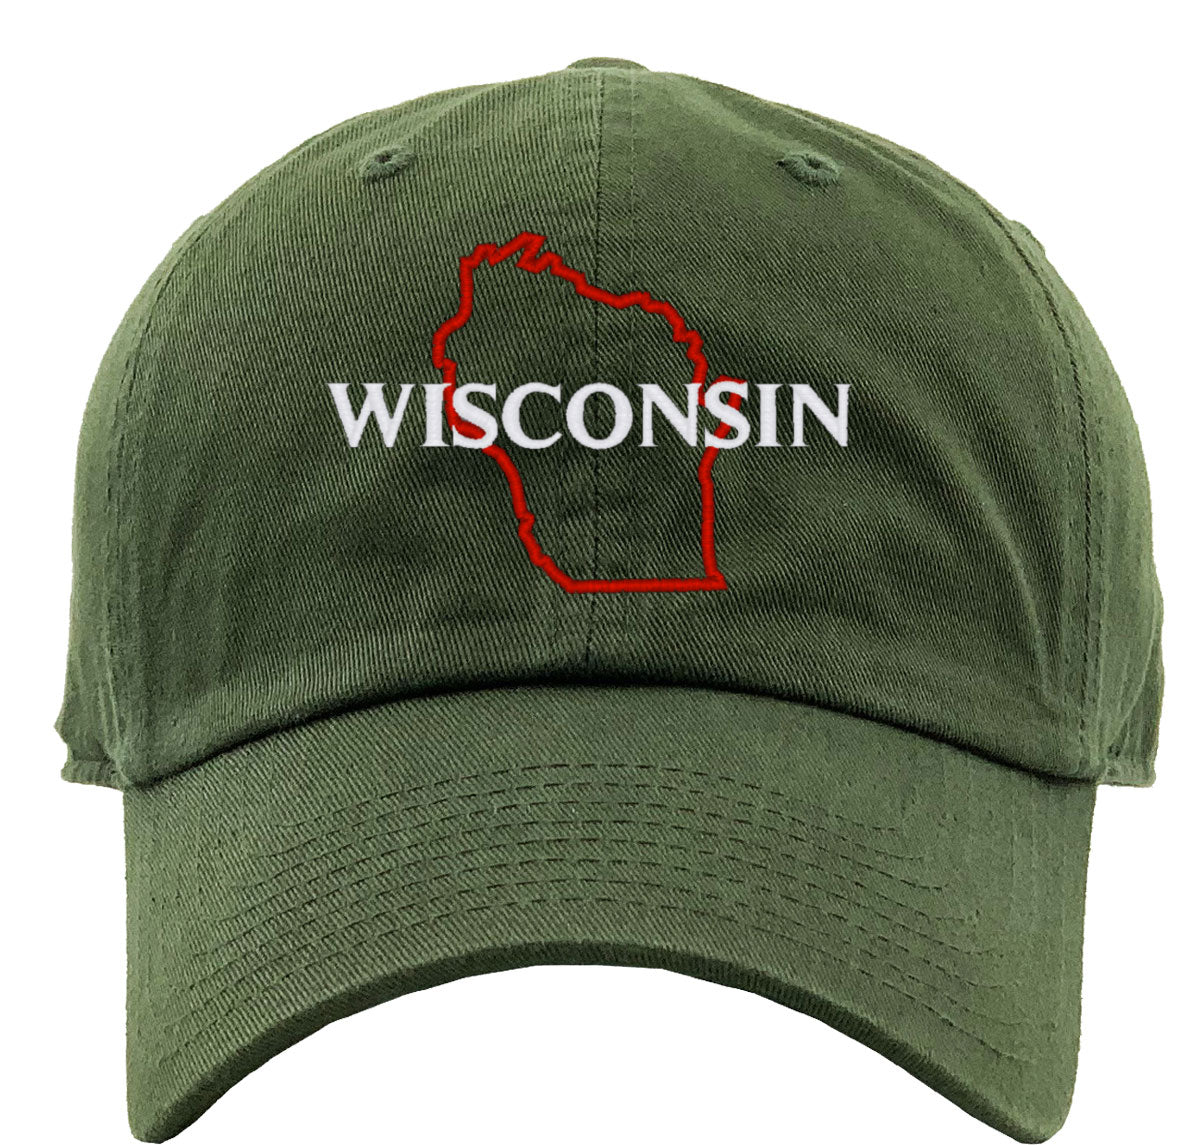 Wisconsin Premium Baseball Cap